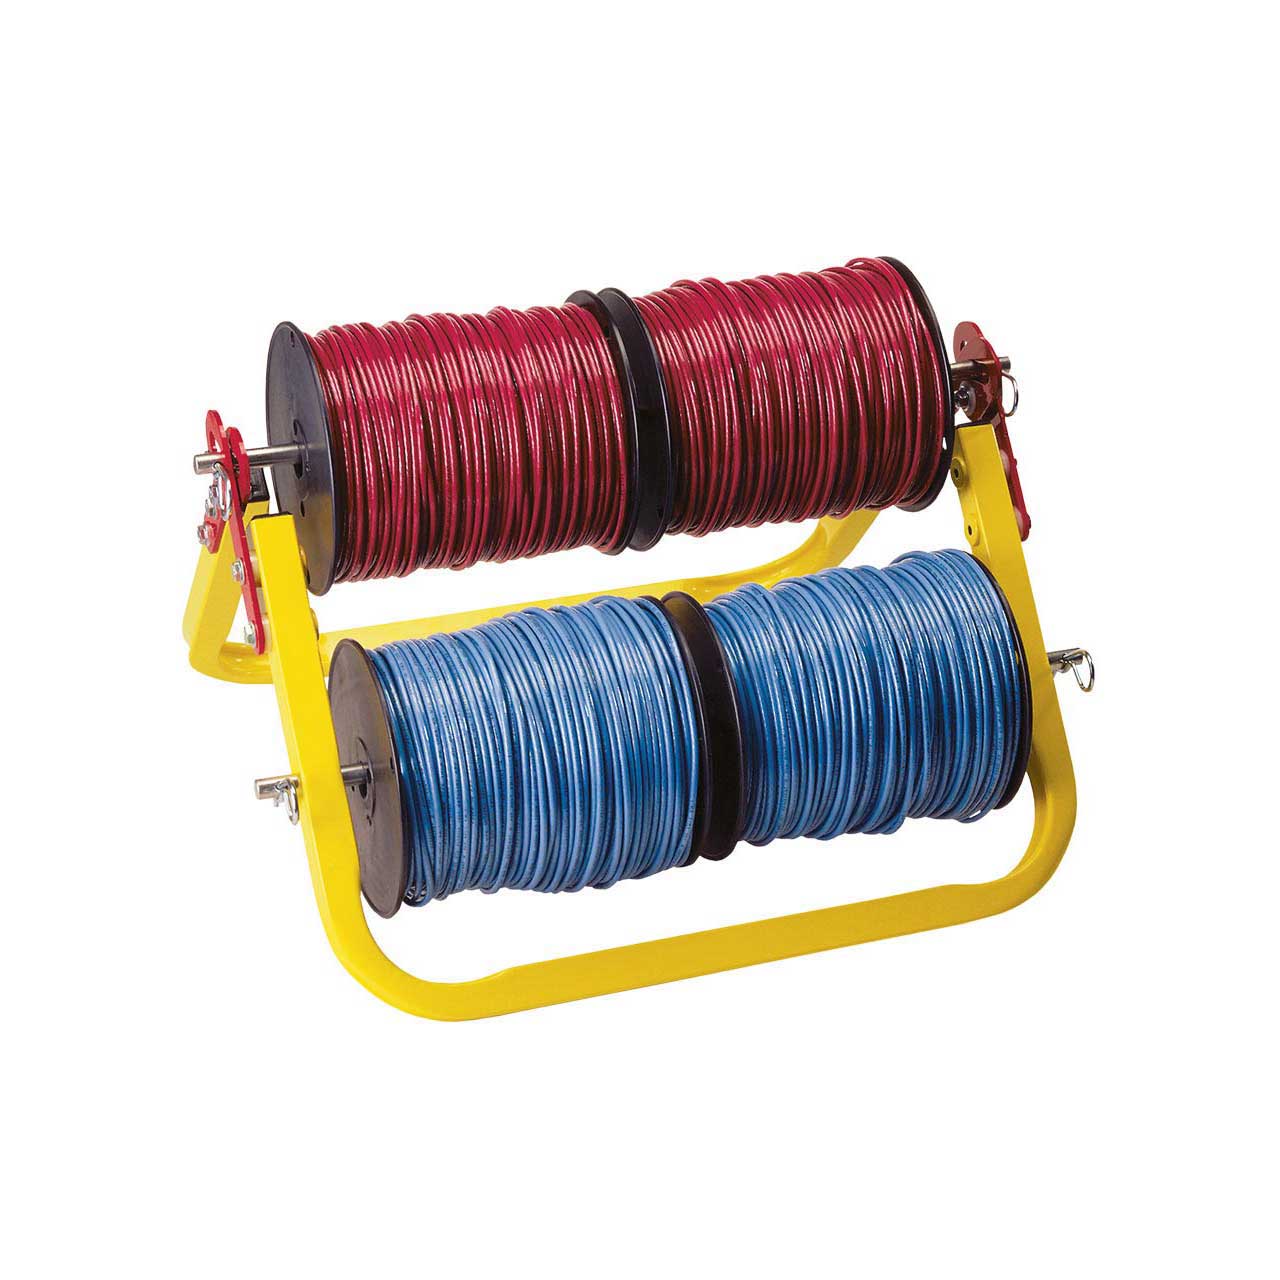 Electrical Wire Reel Spool Rack Caddy Storage Organization Holder